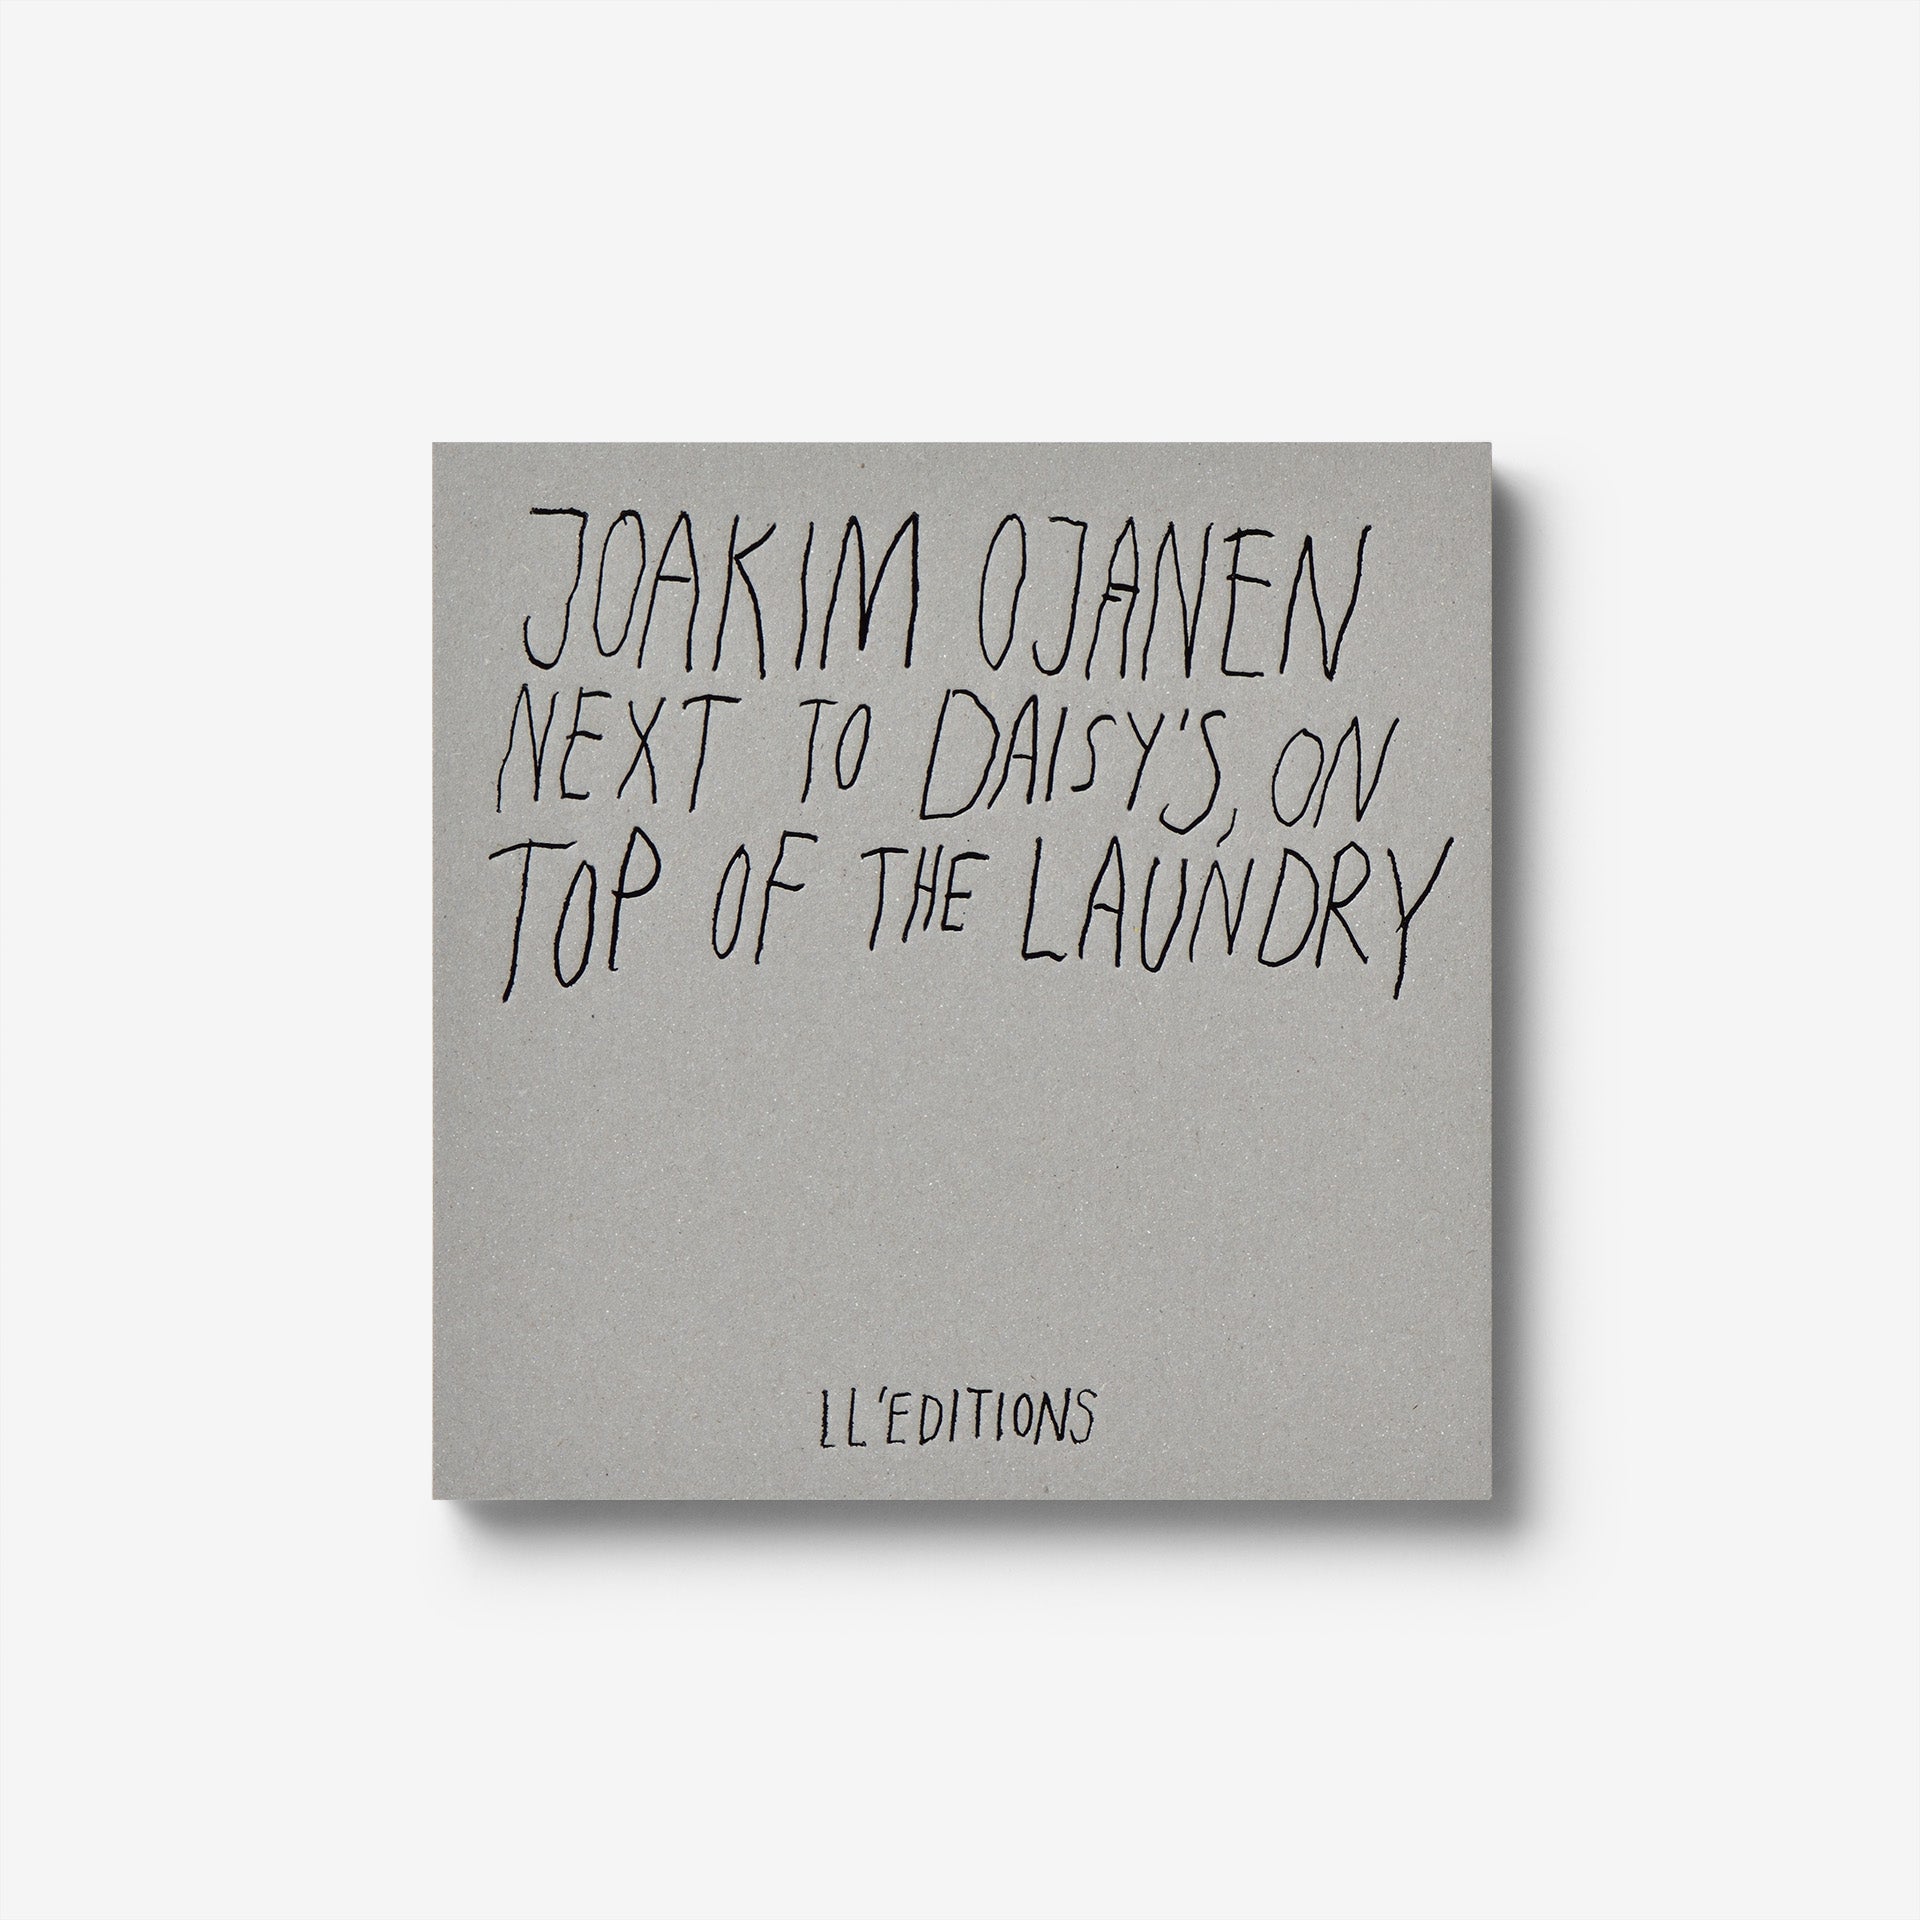 Joakim Ojanen: Next to Daisy's, on top of the laundry | North East